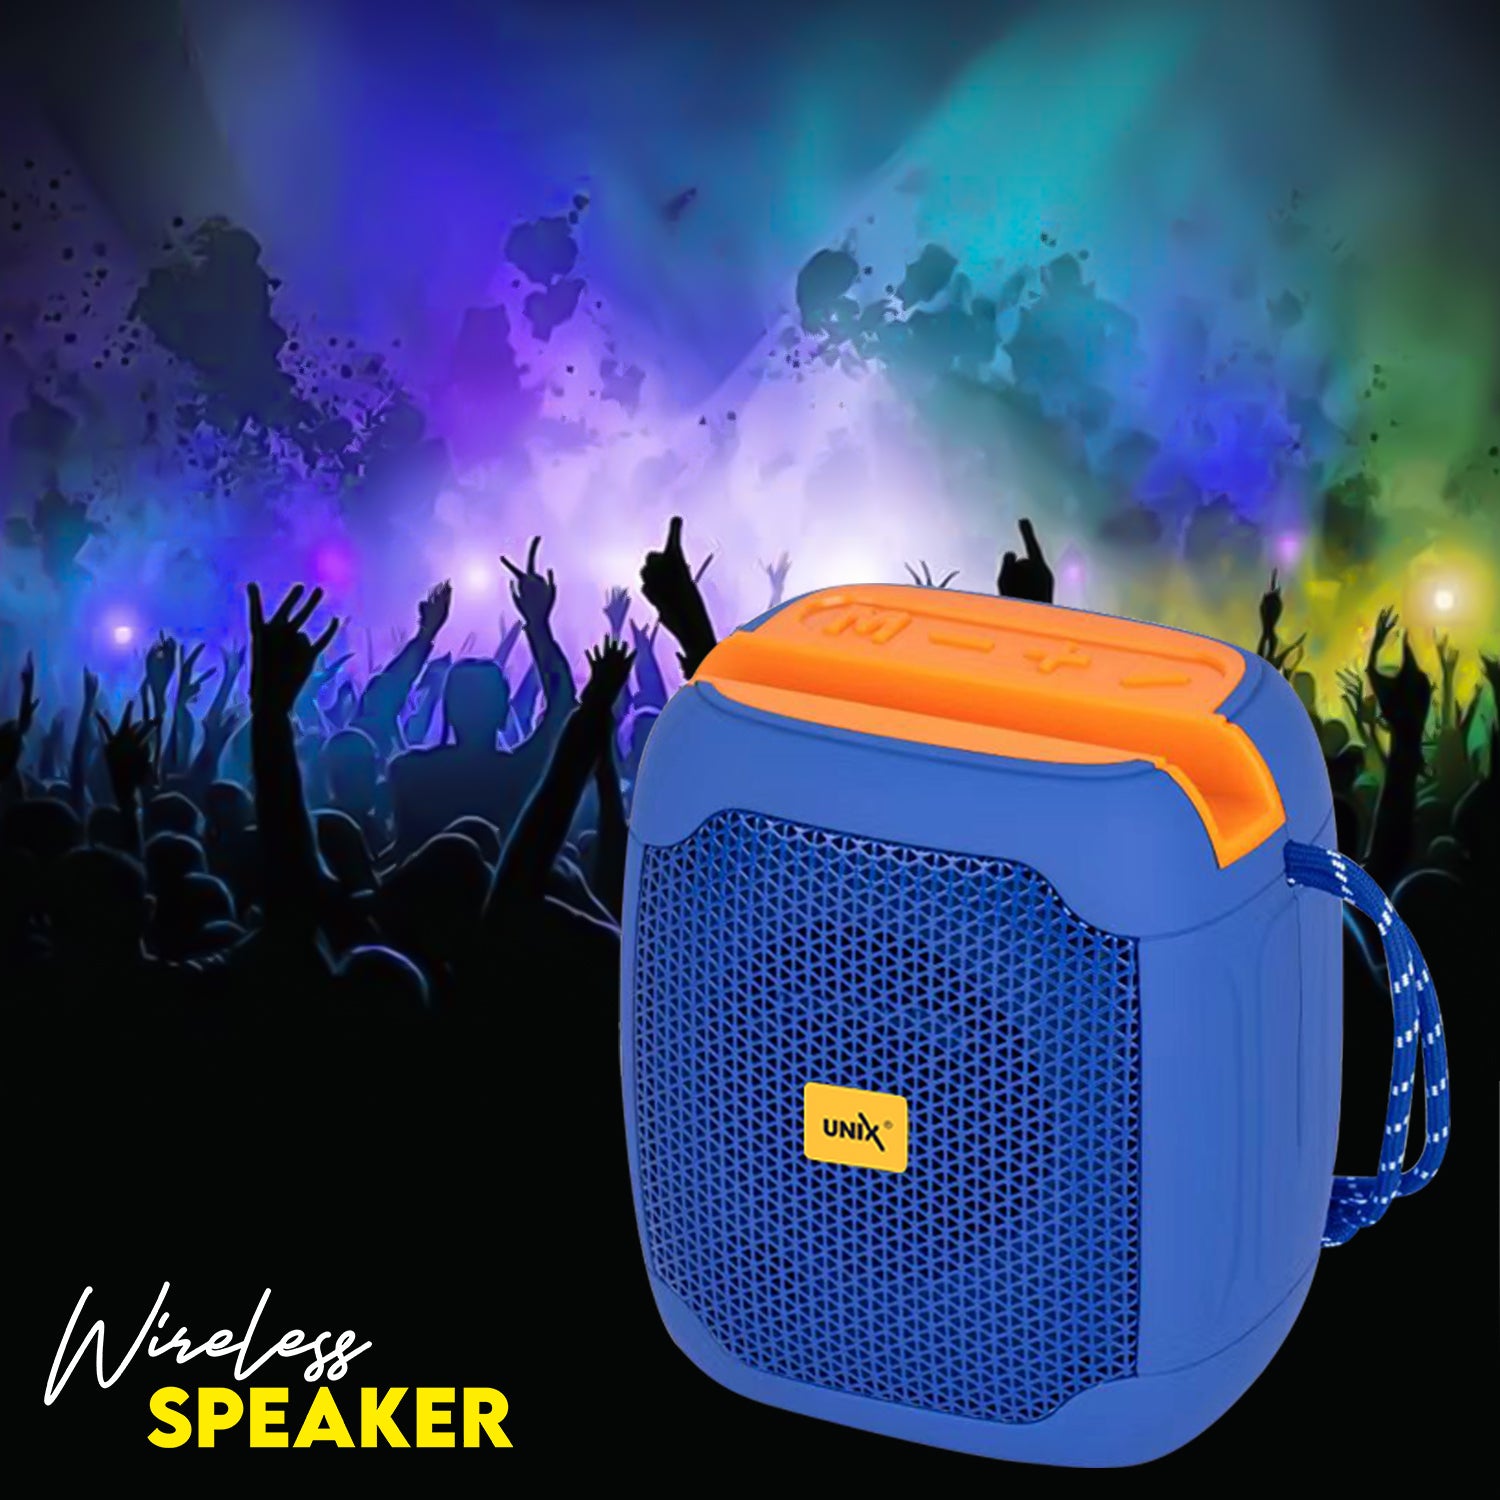 Unix UX-888 Super Sonic Wireless Speaker - Super Bass Blue down